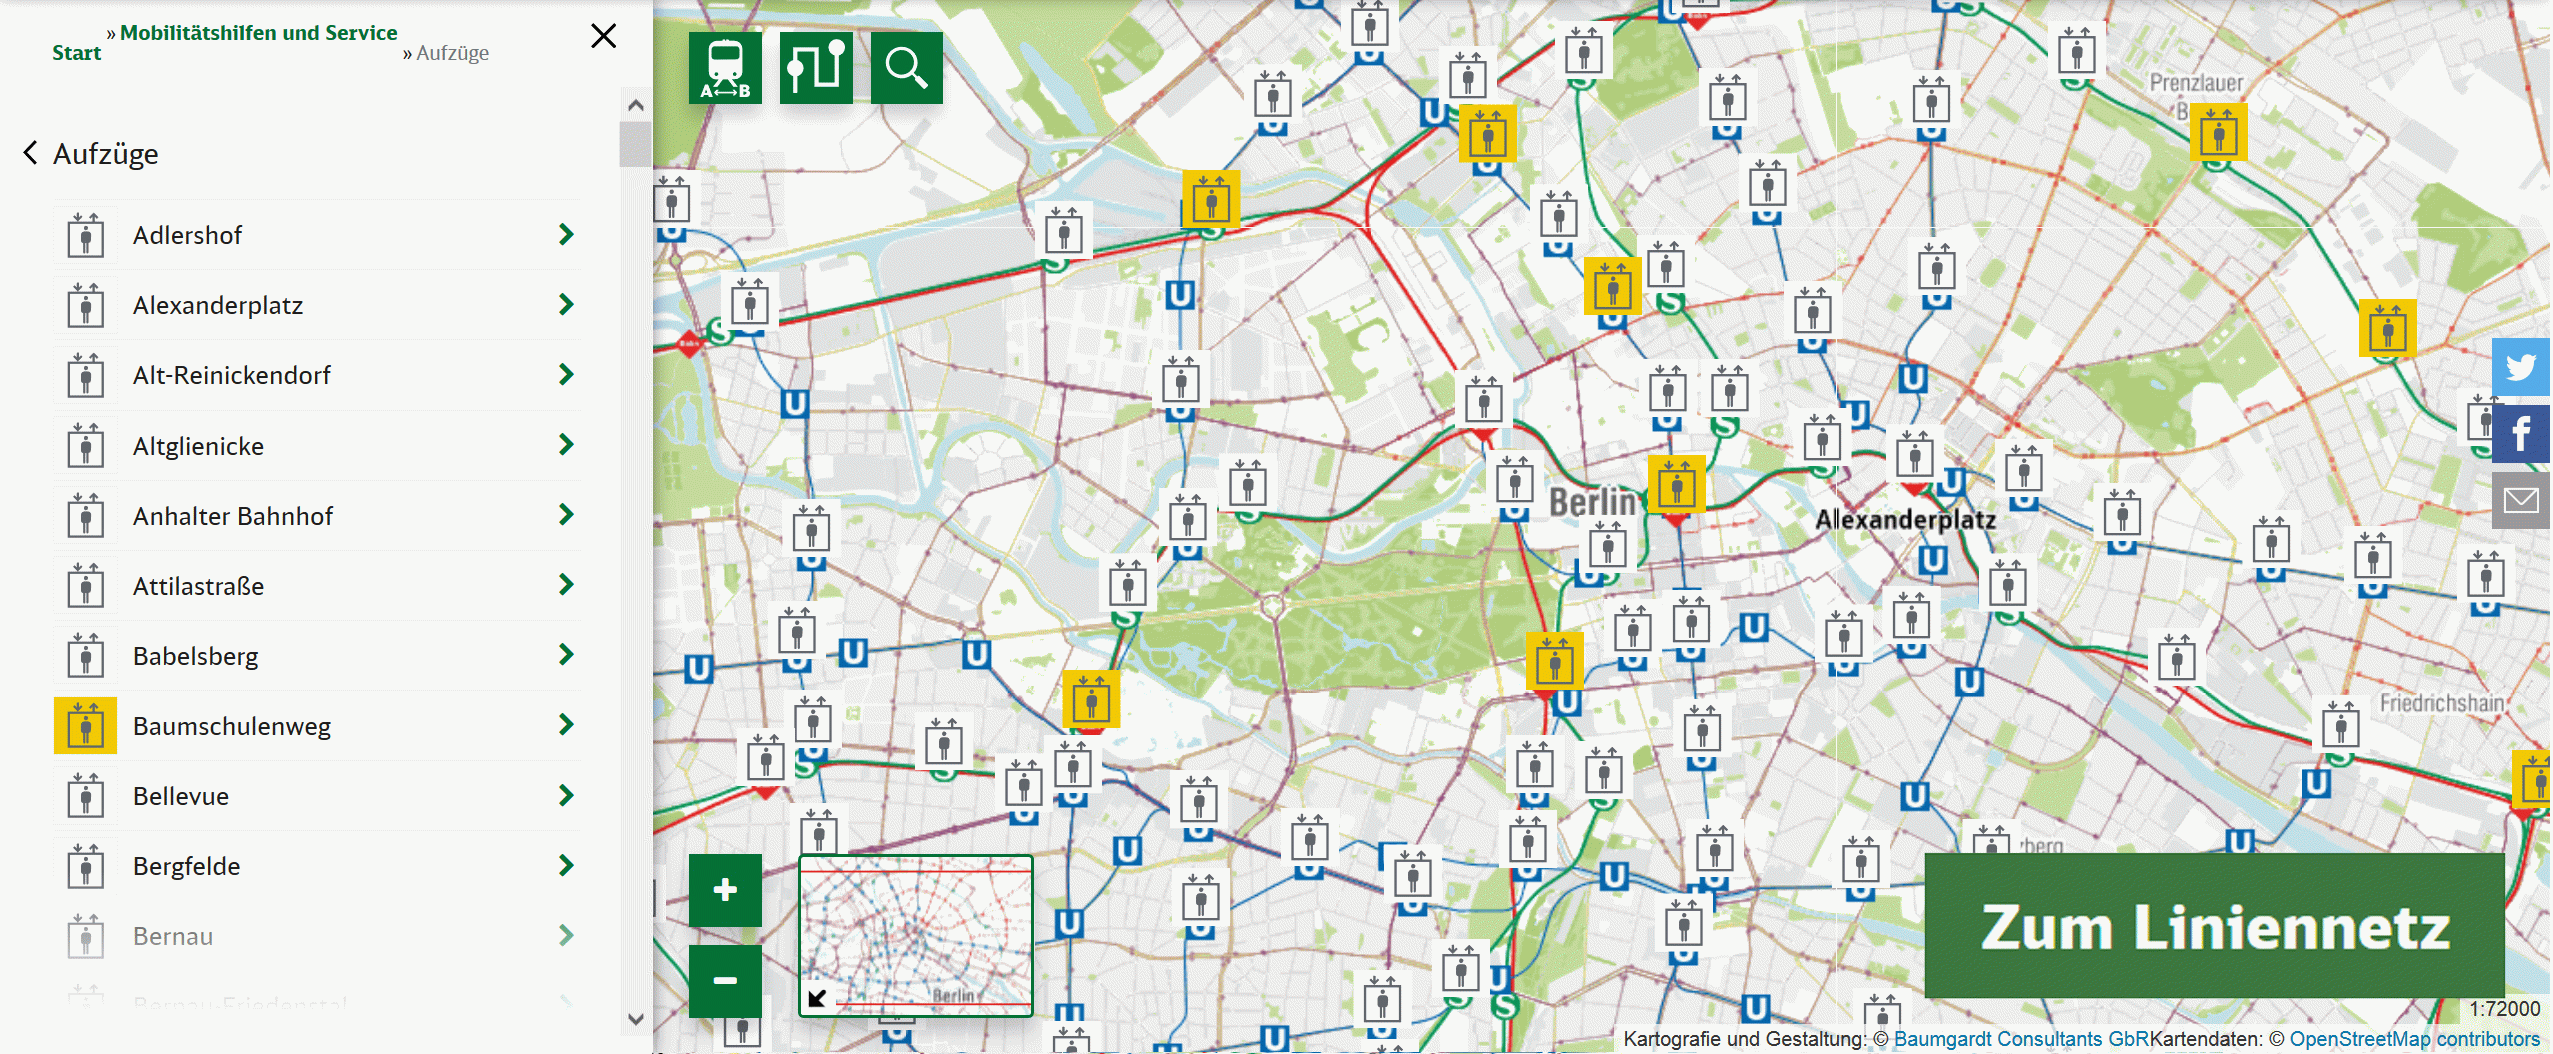 S-Bahn Berlin - Interaktives Liniennetz